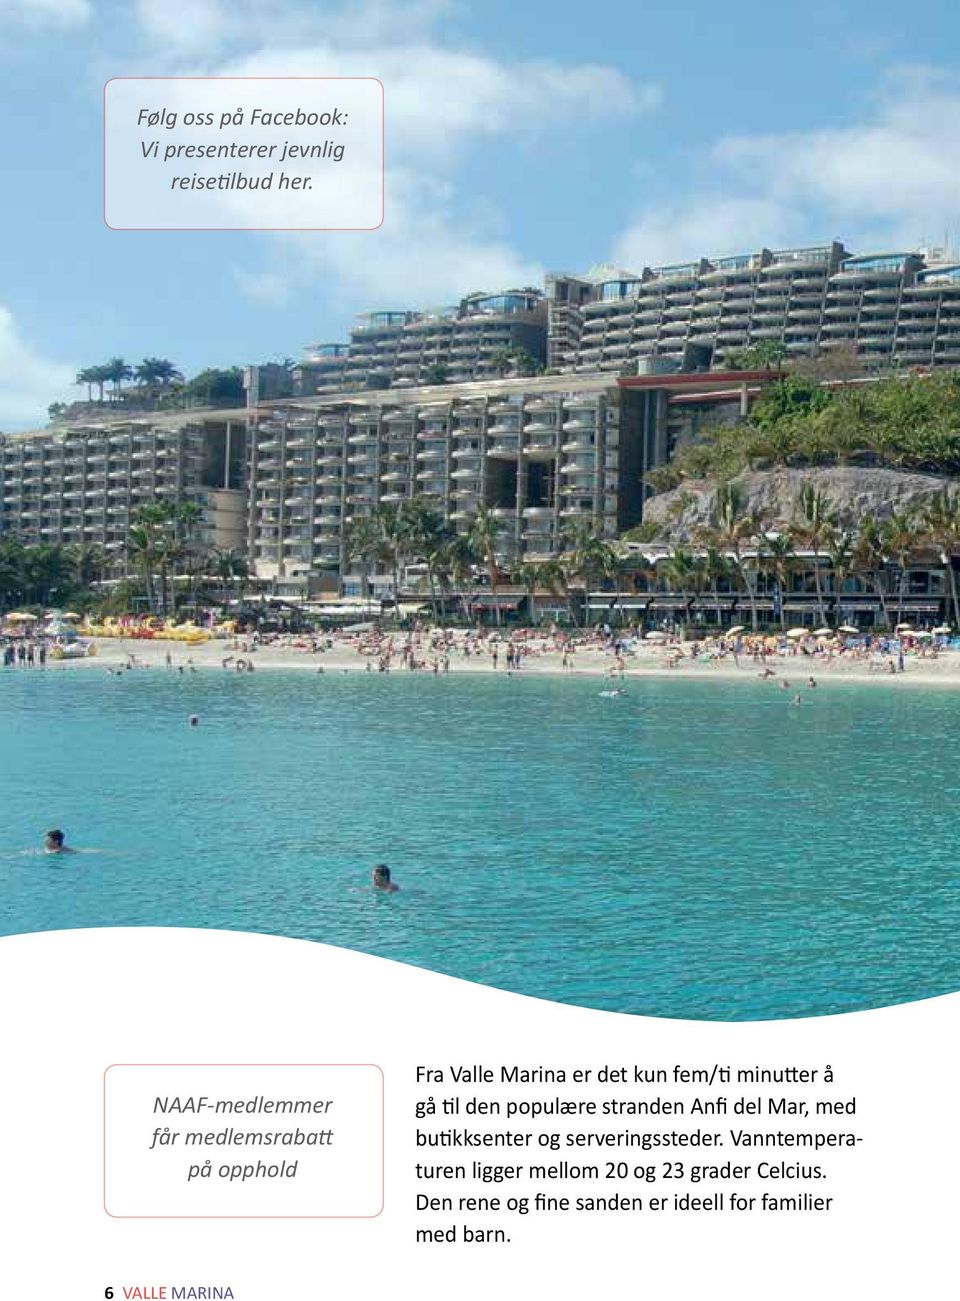 gå til den populære stranden Anfi del Mar, med butikksenter og serveringssteder.